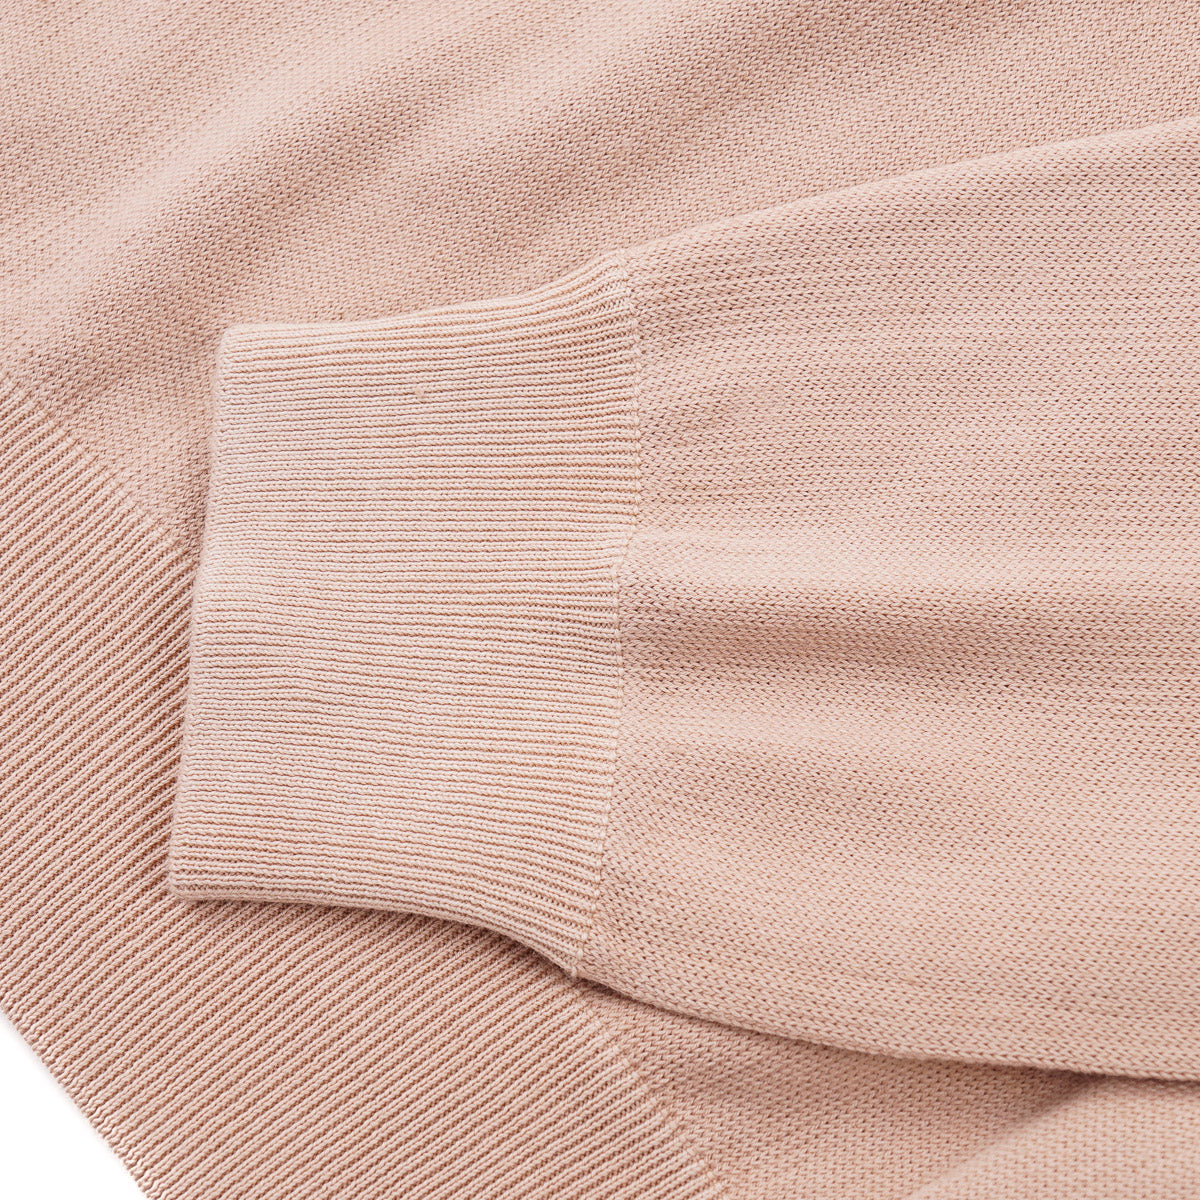 Boglioli Soft Cotton-Silk-Cashmere Sweater - Top Shelf Apparel